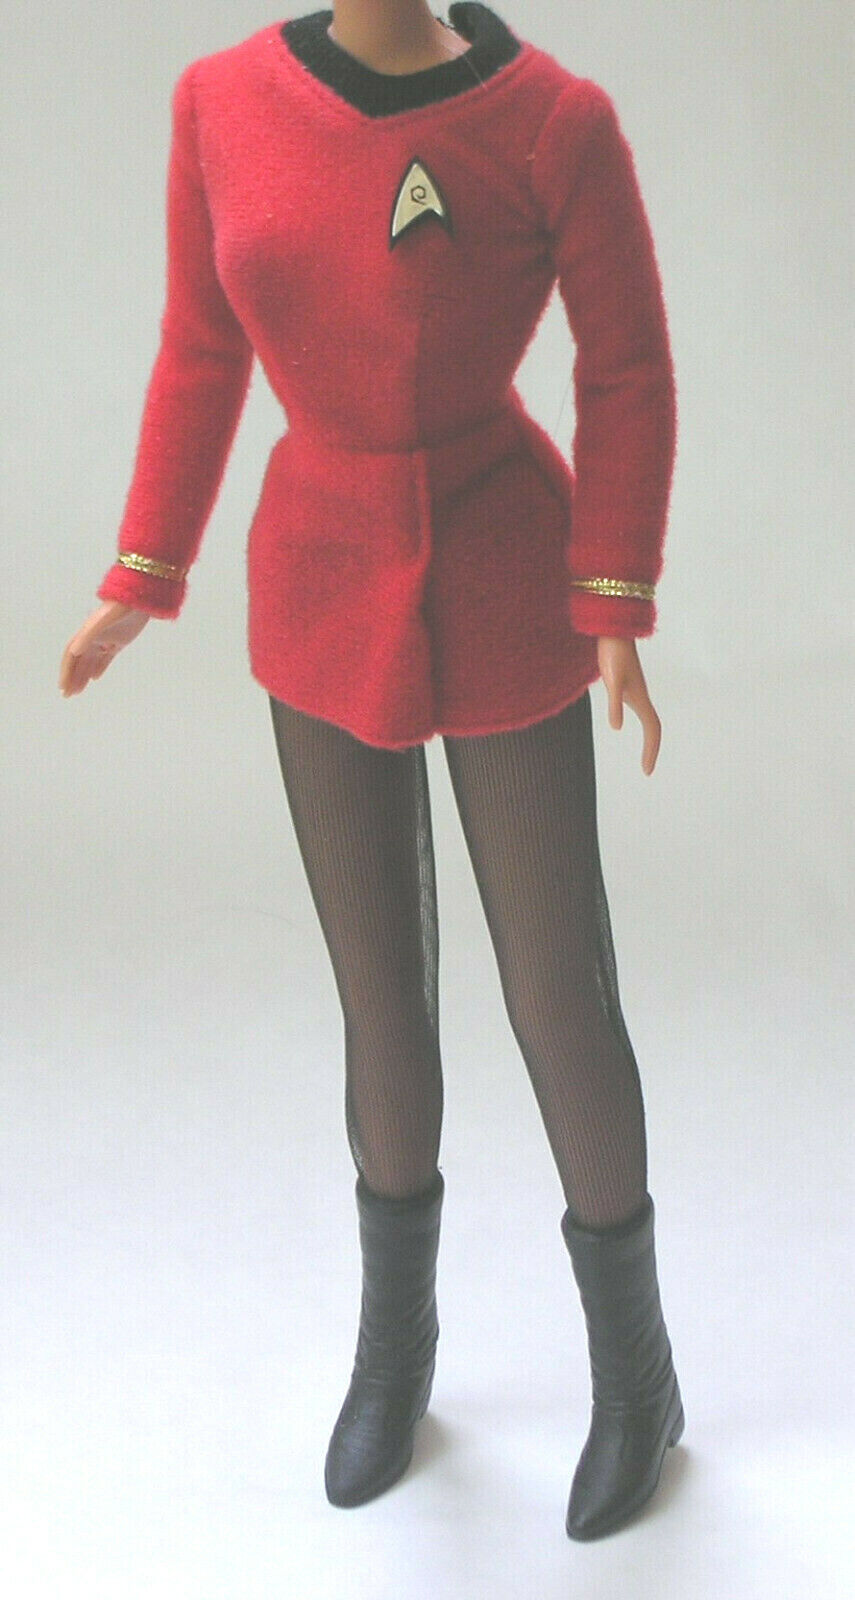 Star Trek Lieutenant Uhura Officer uniform outfit Barbie clothes dress boots